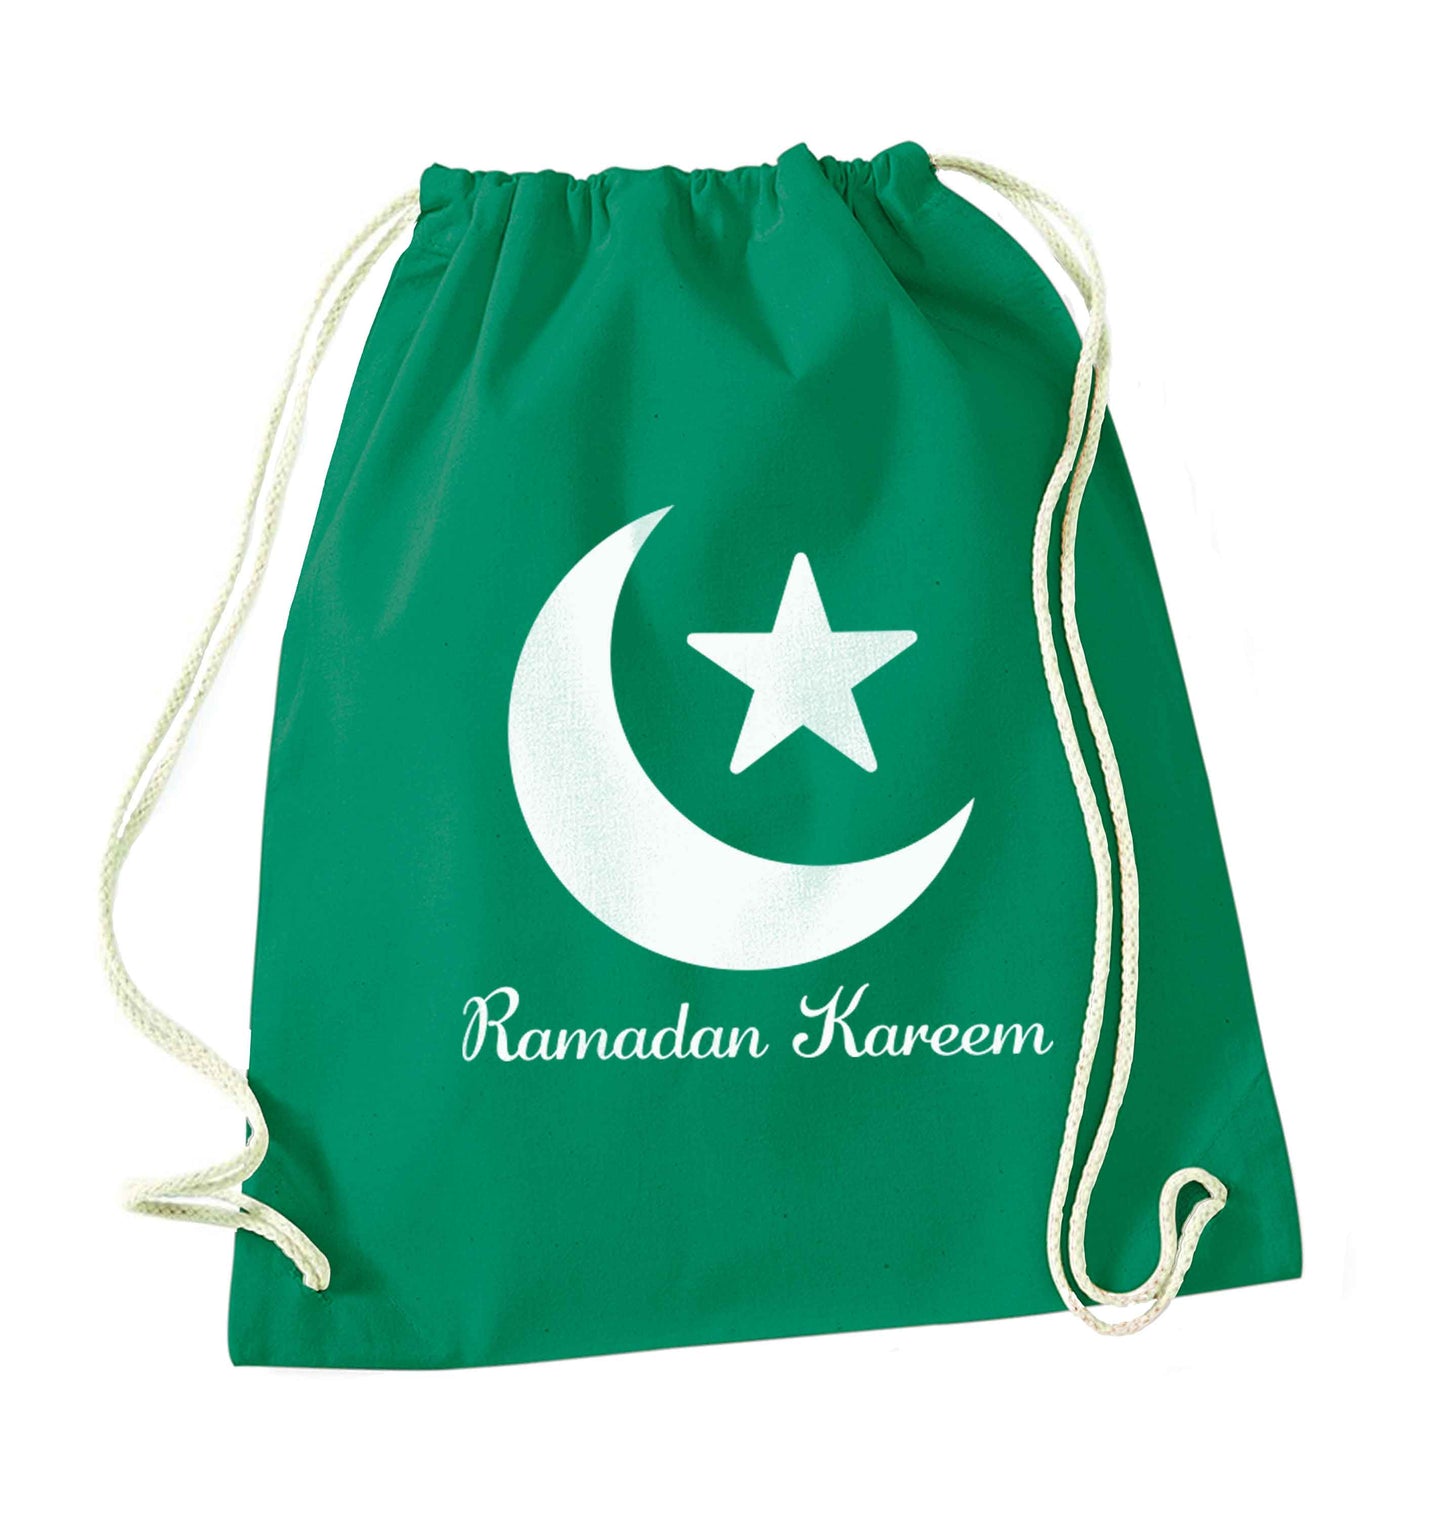 Ramadan kareem green drawstring bag